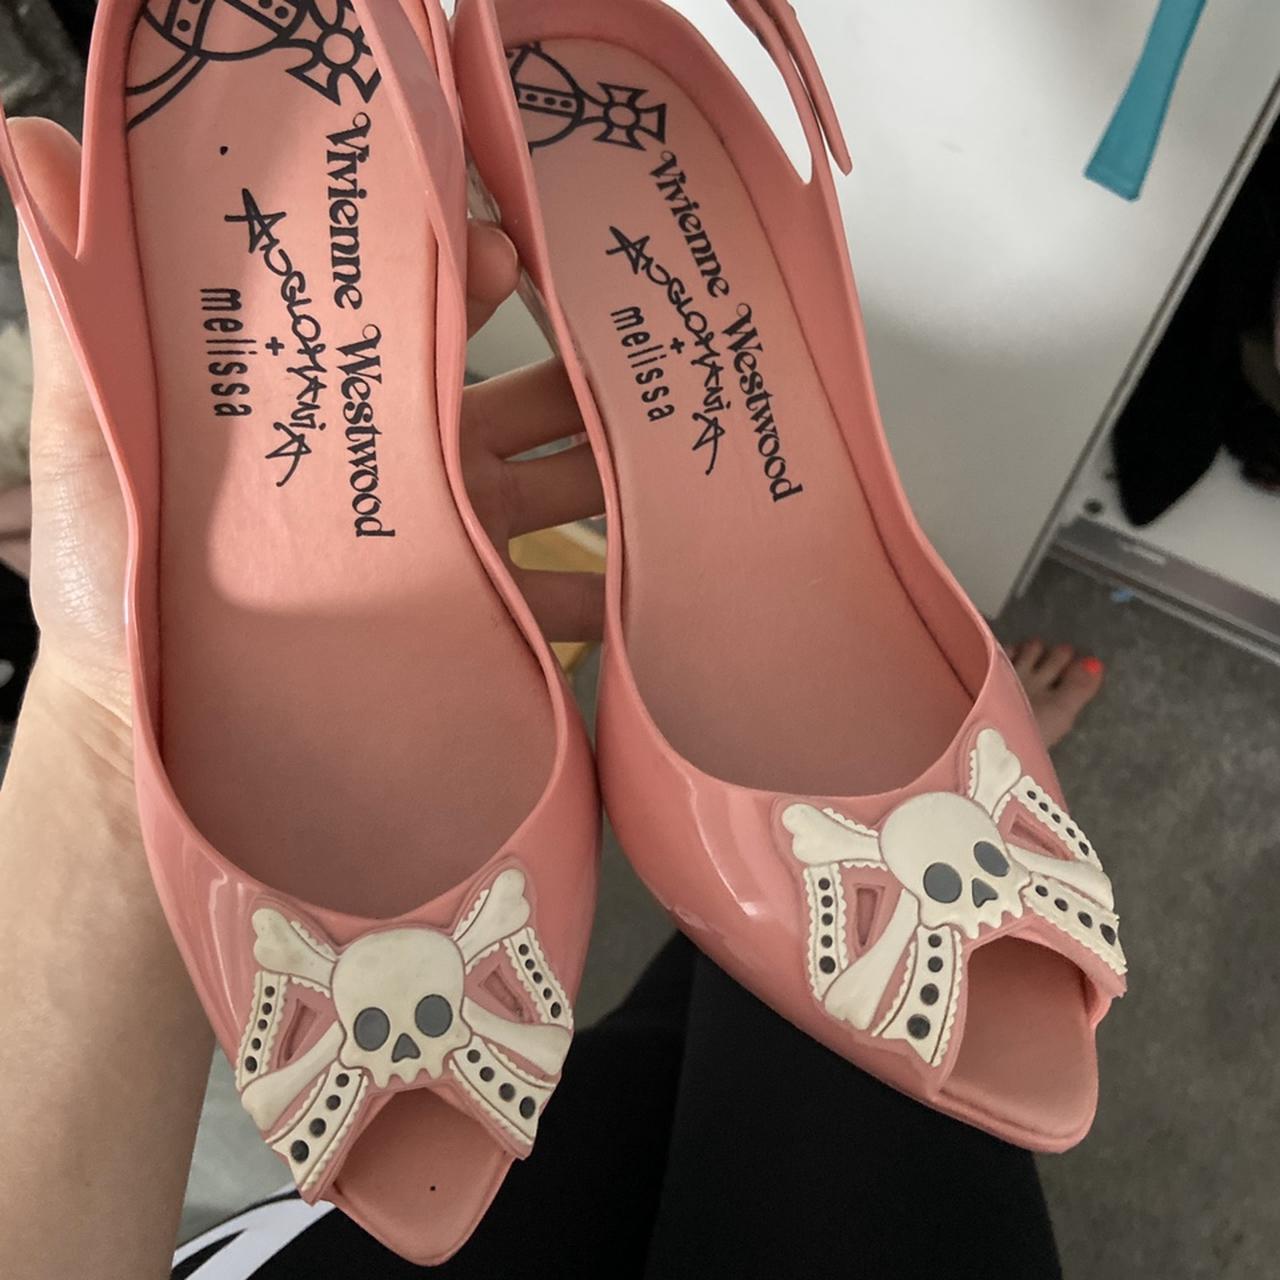 Vivienne Westwood melissa jelly heels, with skull